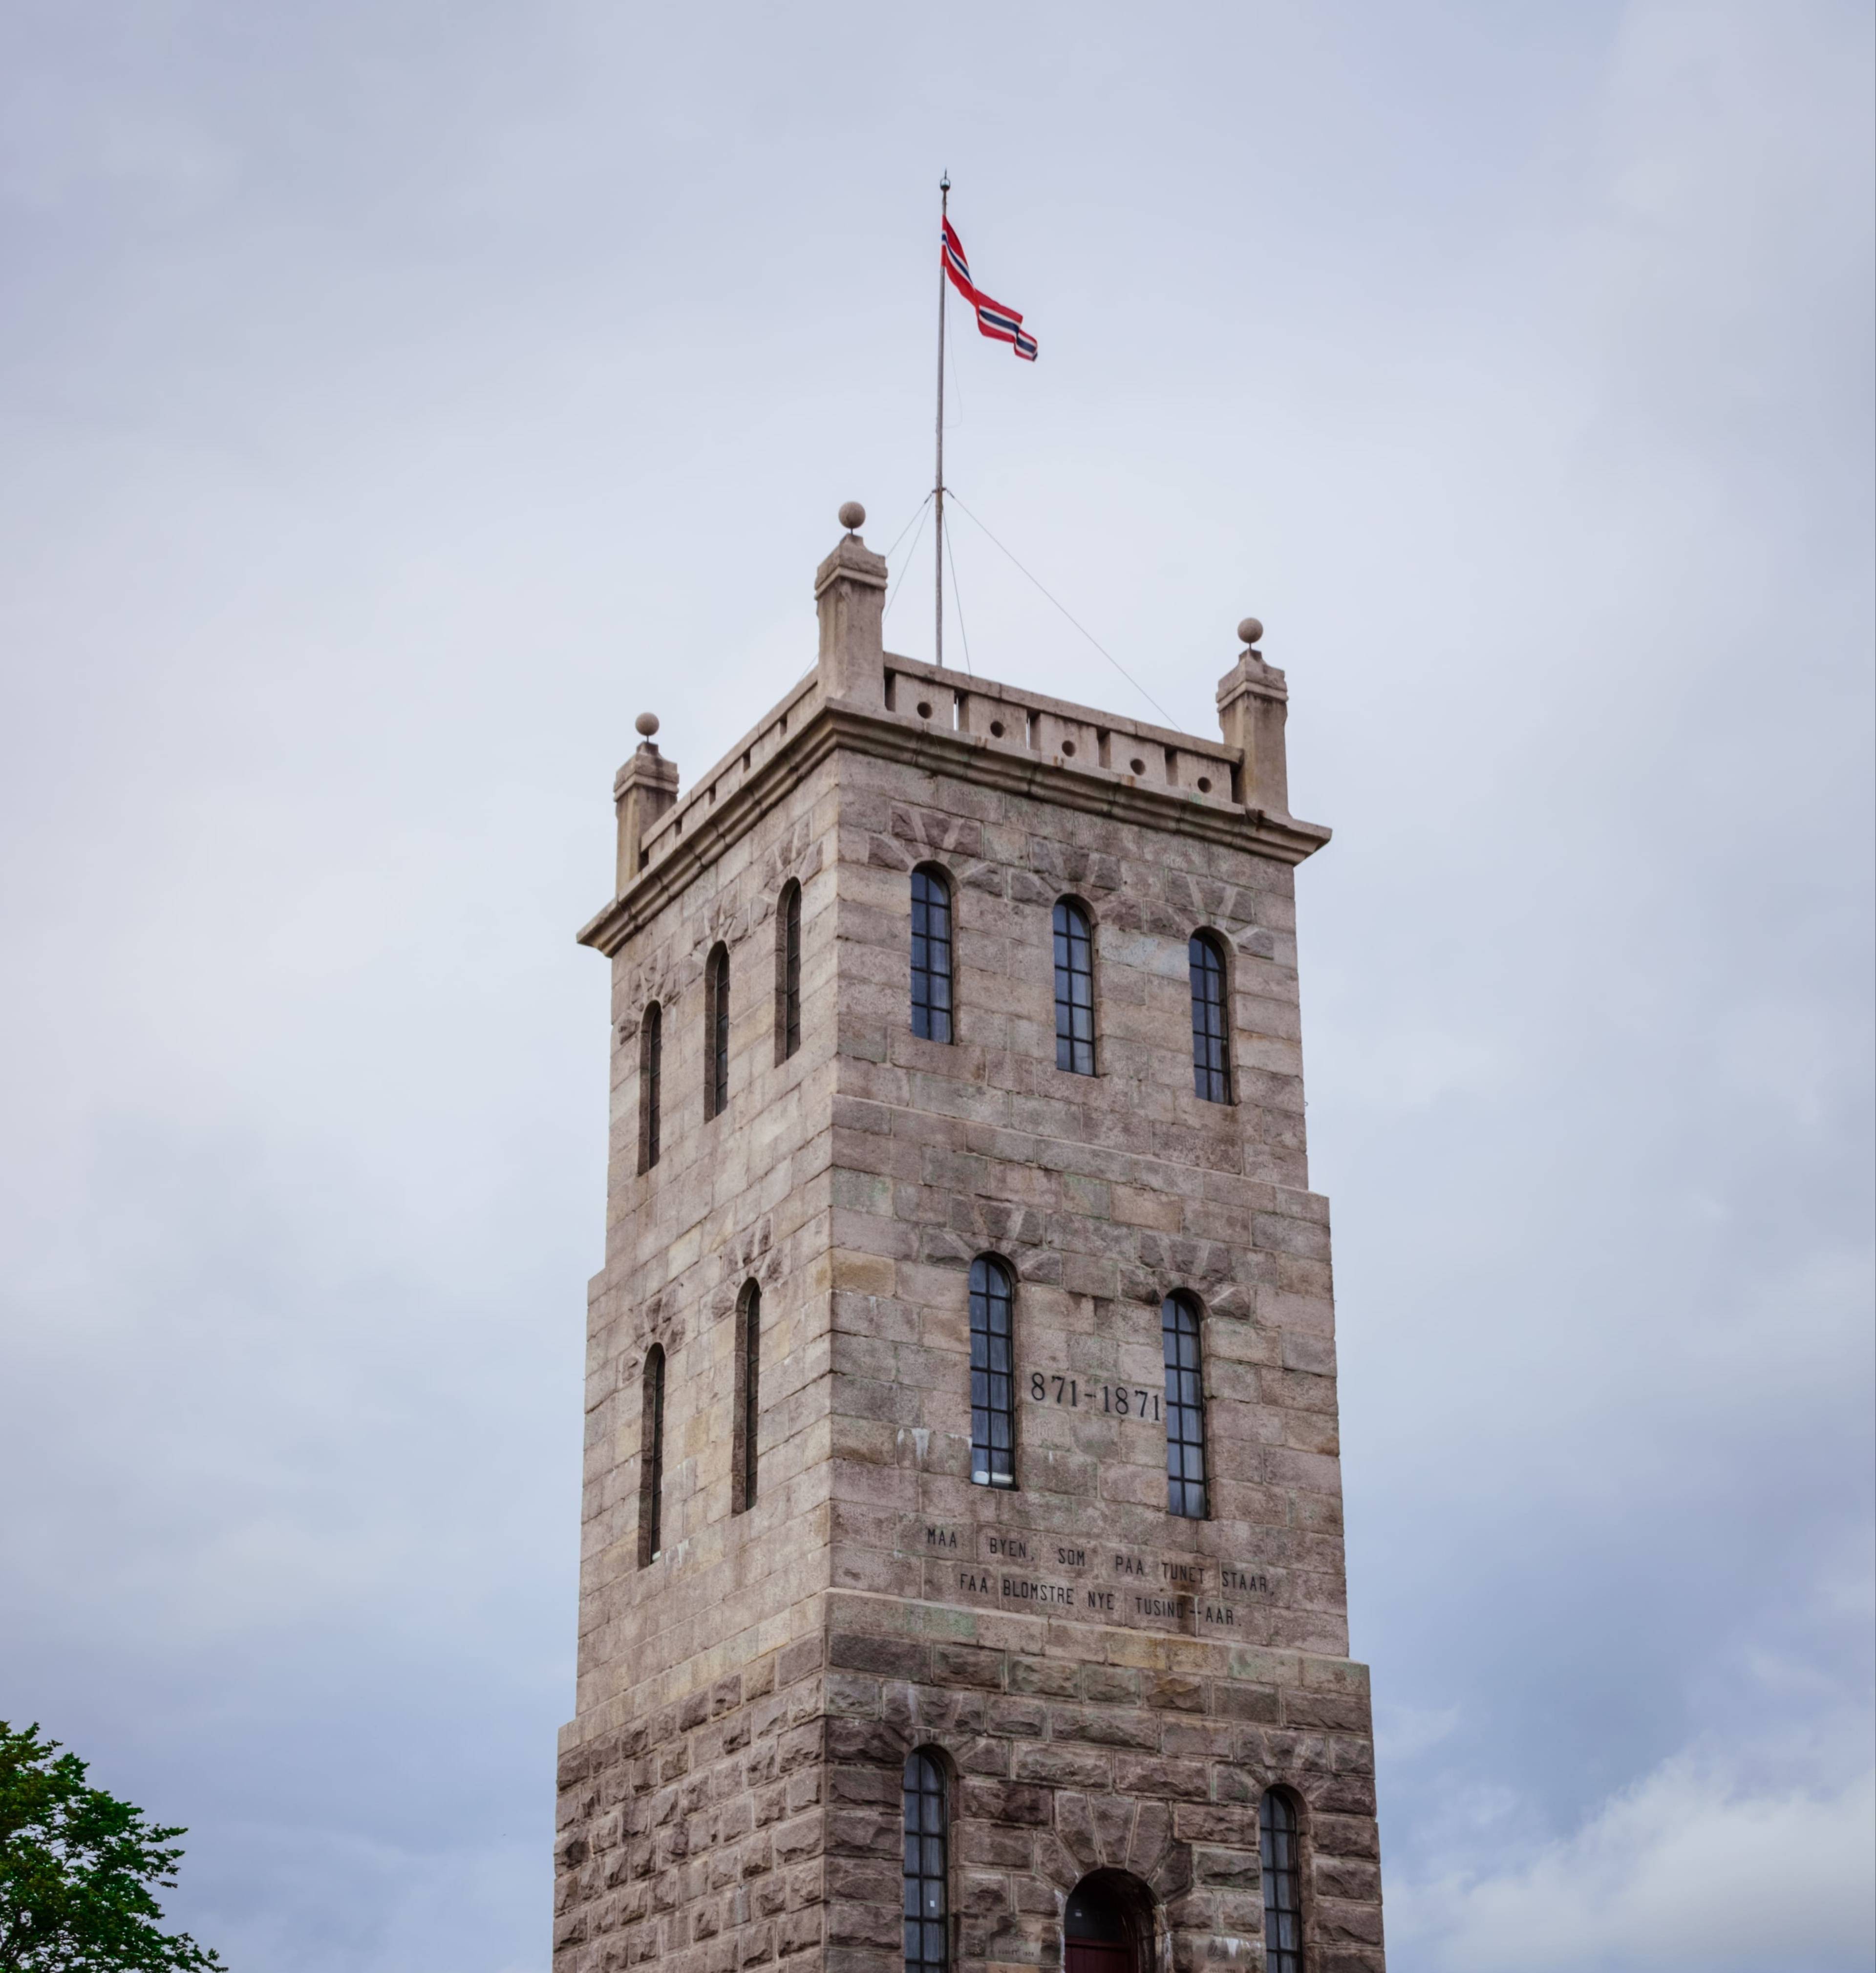 Slottsfjellet Tower